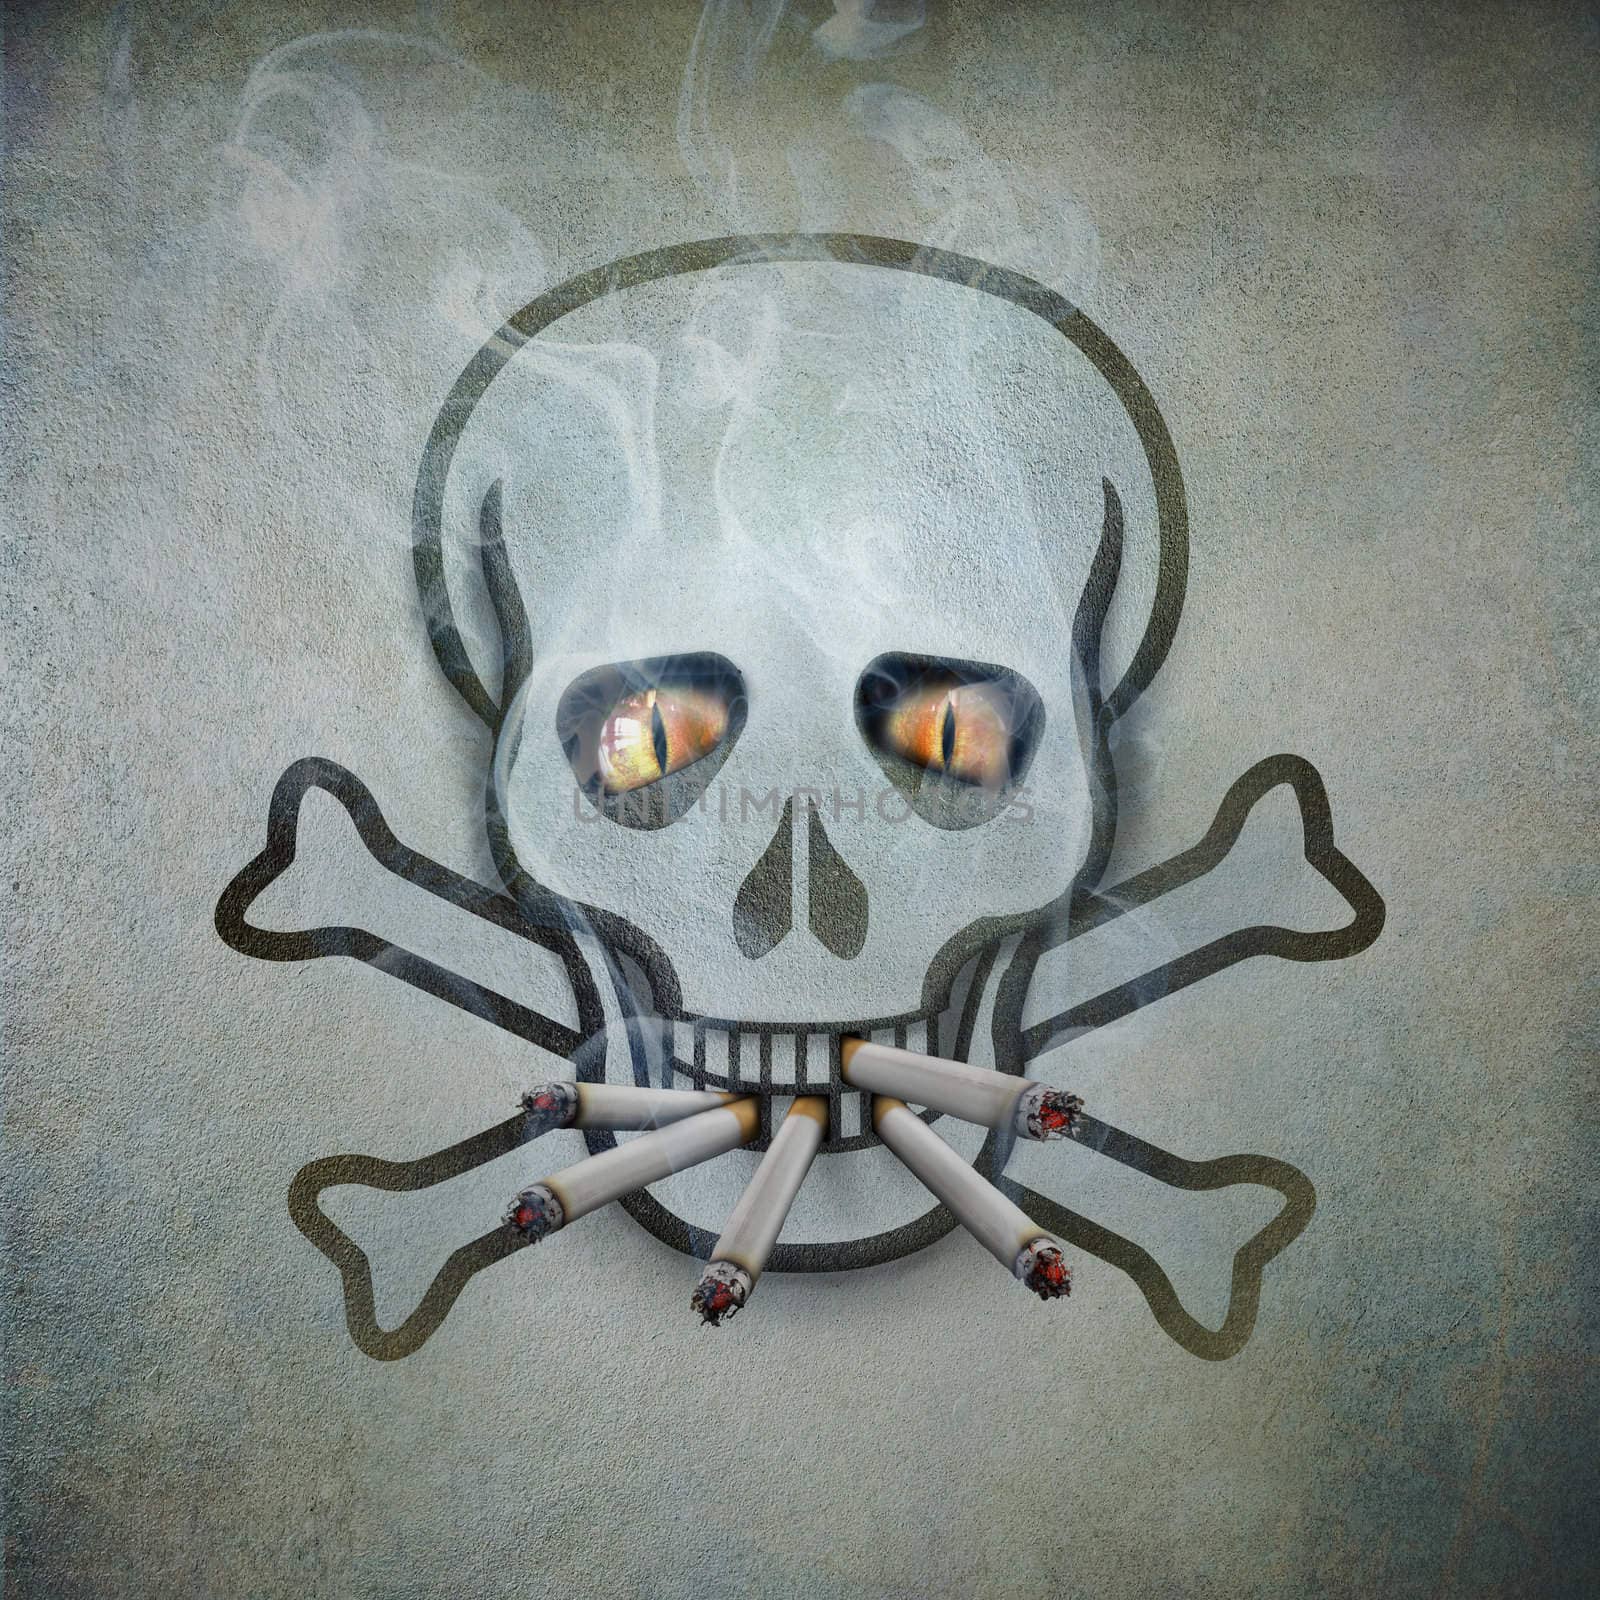 A wall skeleton skull smoking five cigarettes